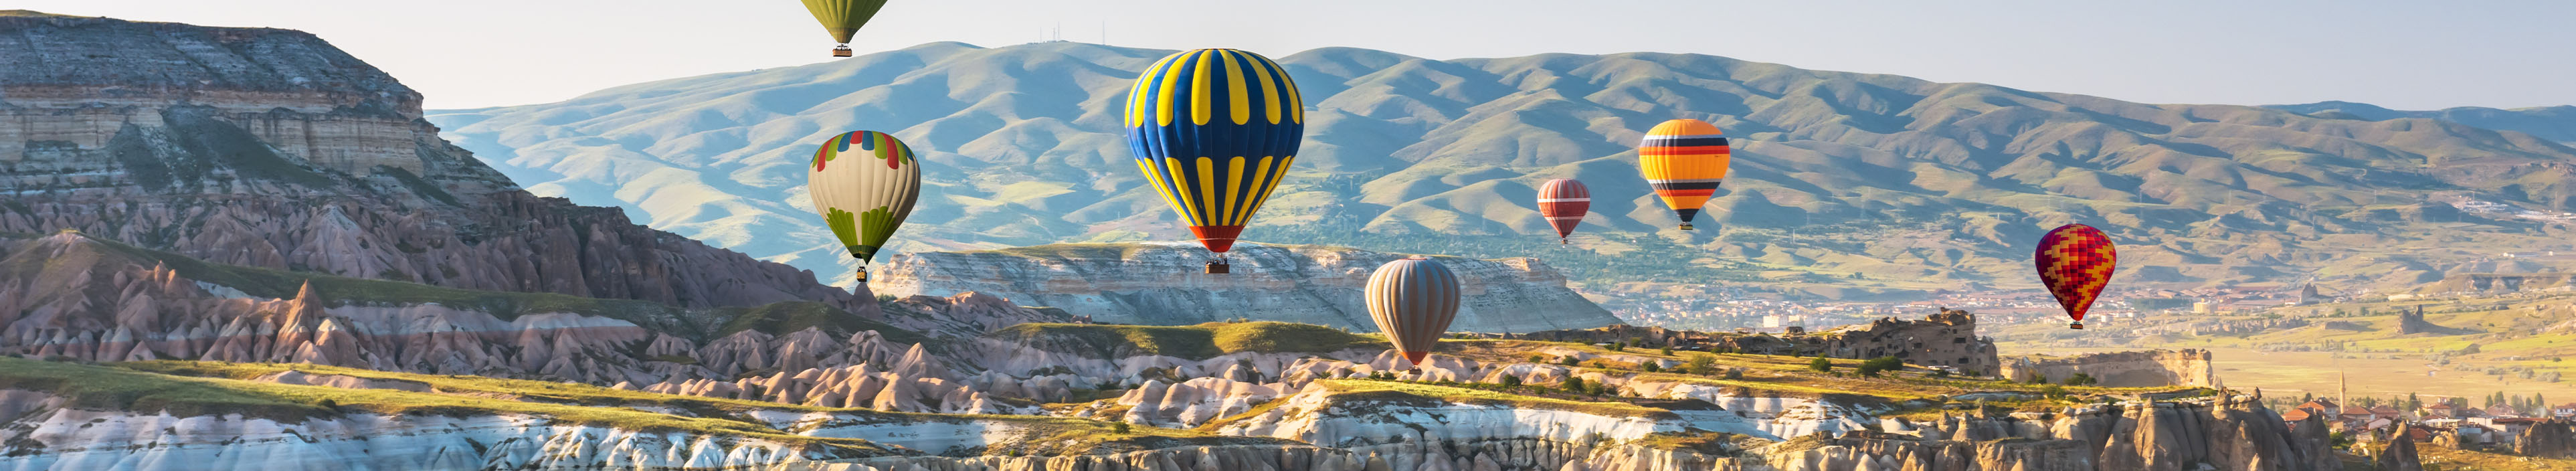 Heißluftballons fliegen über die Landschaft in Kappadokien, Türkei.